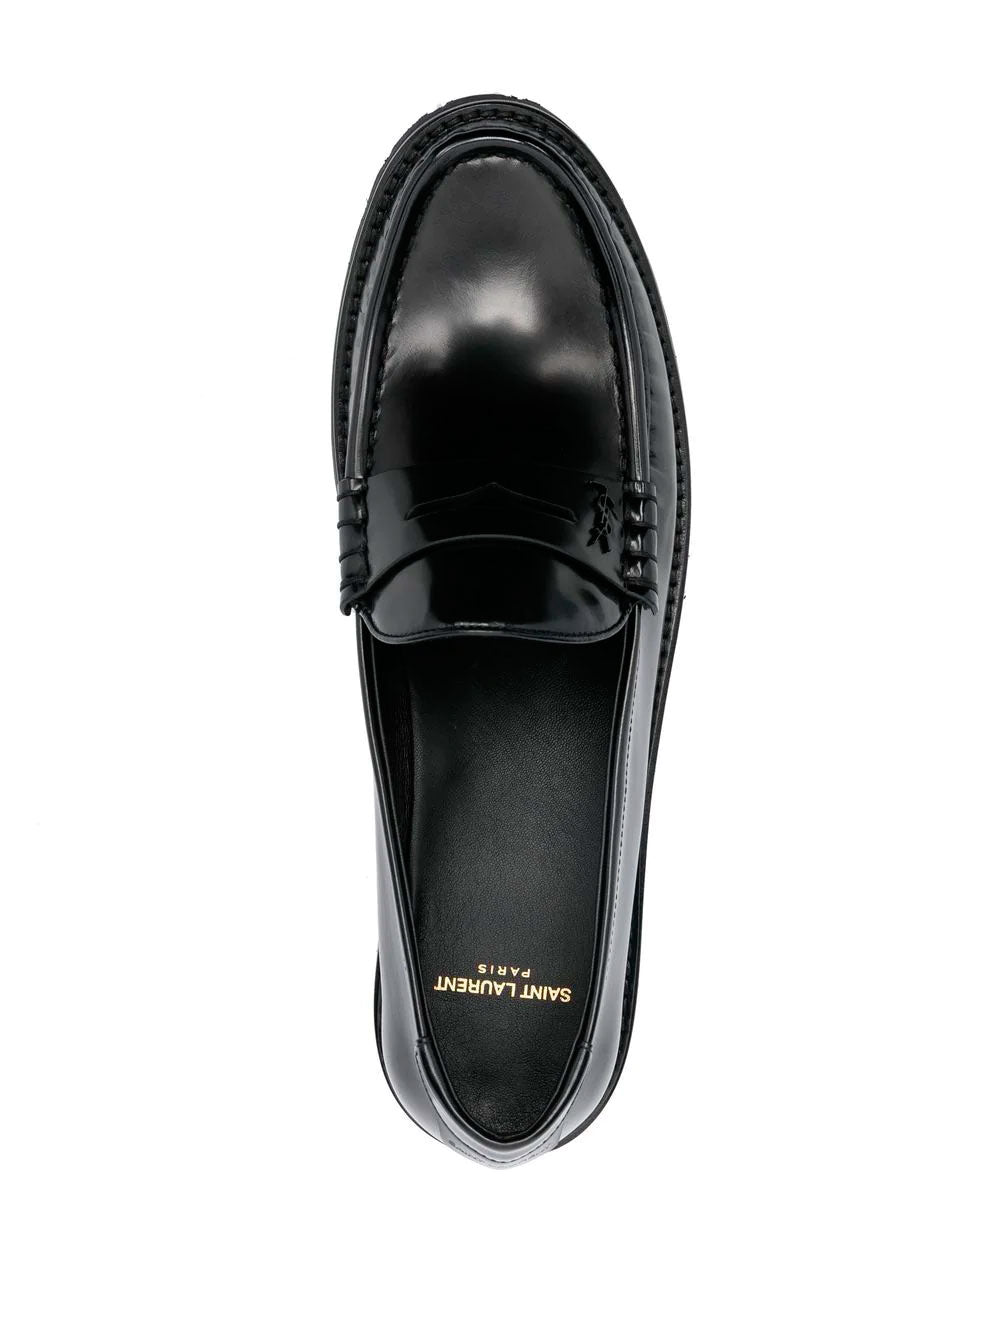 Le loafer high-shine finish flat shoes